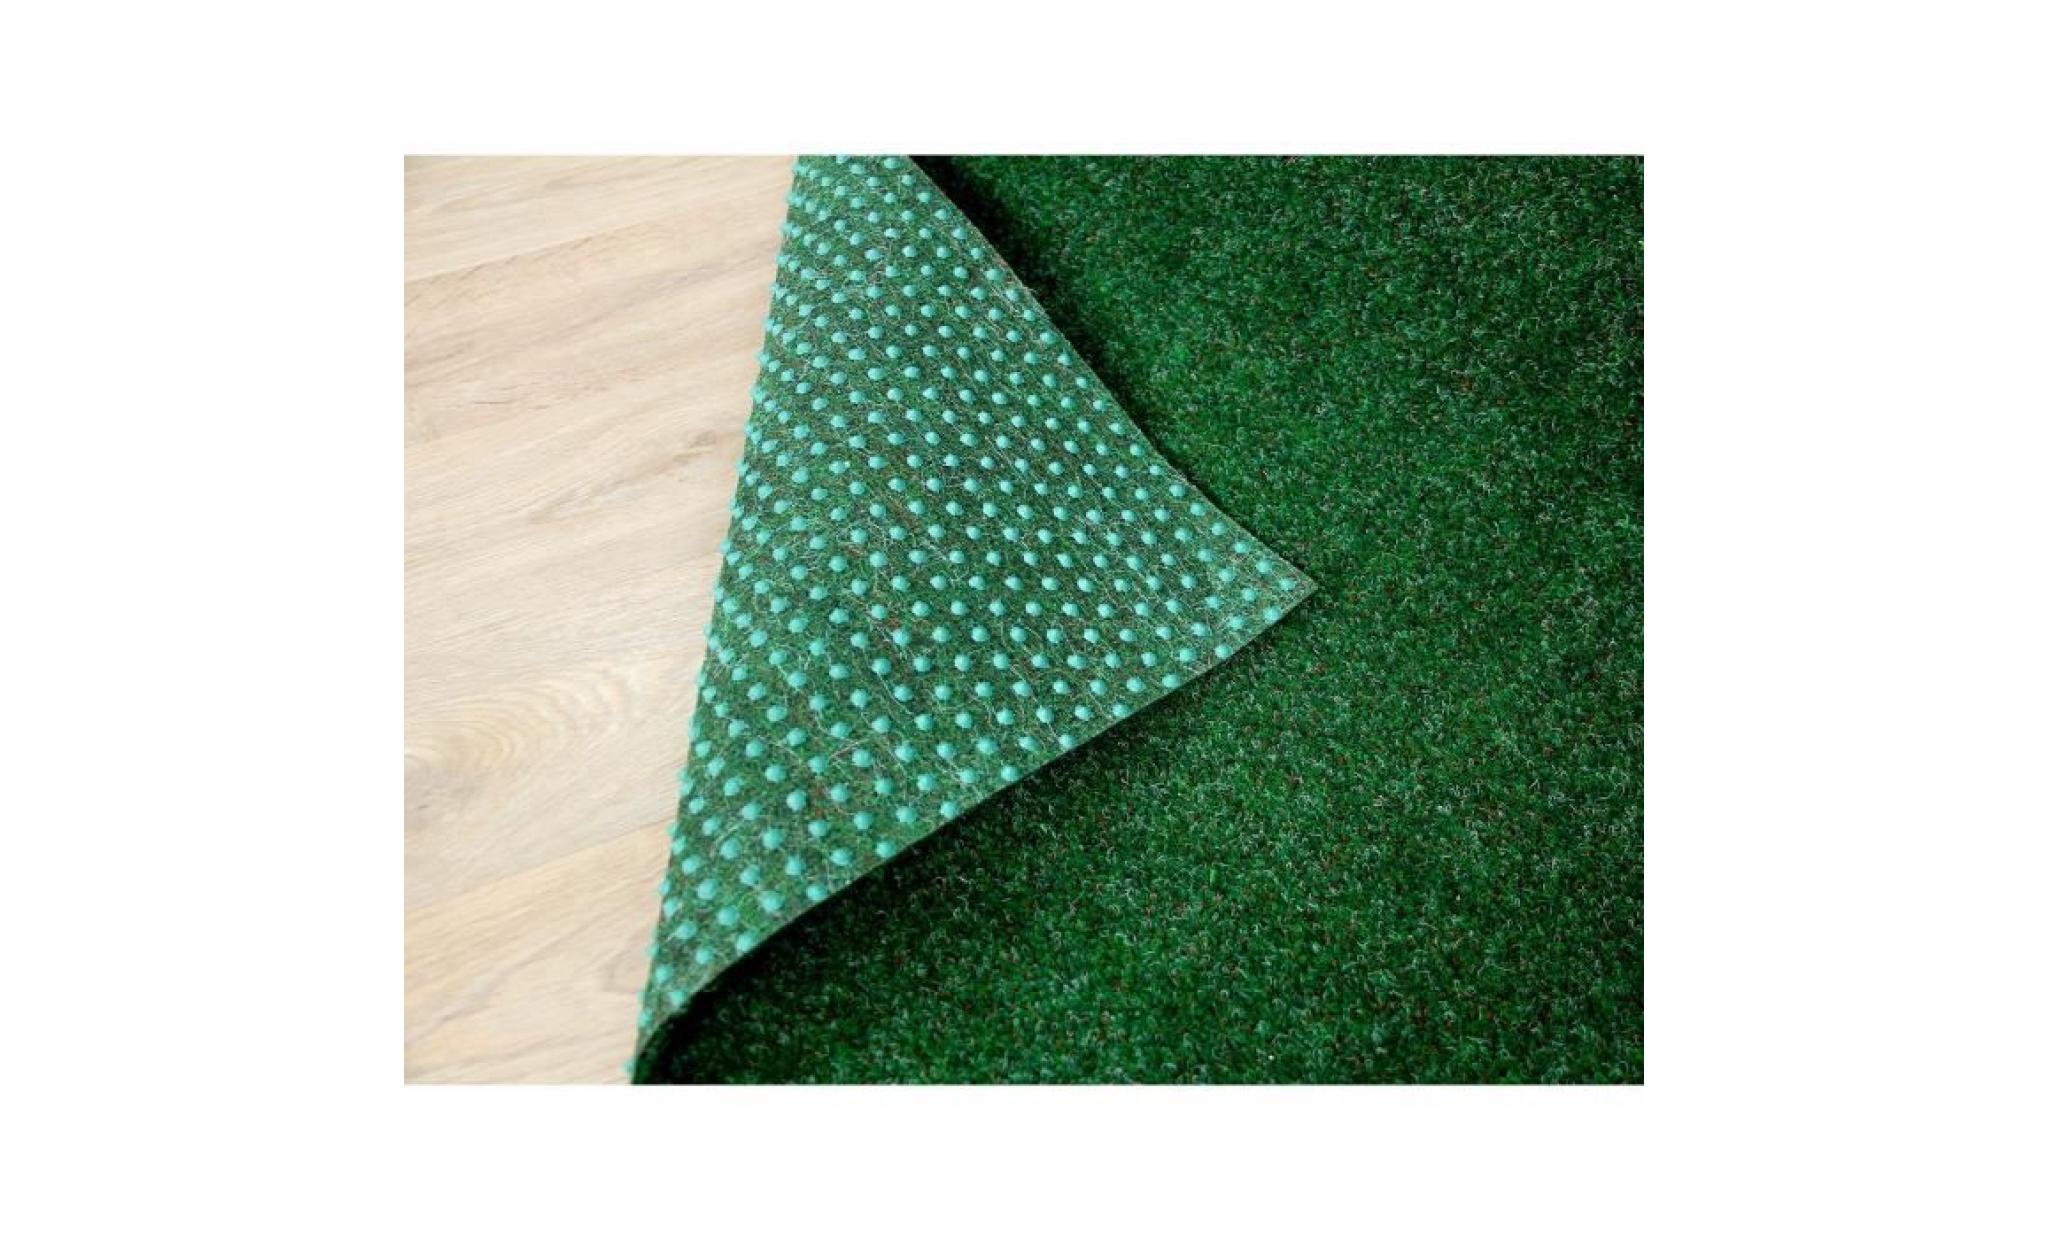 kingston   tapis type gazon artificiel – pour jardin, terrasse, balcon   anthracite [200x100 cm] pas cher